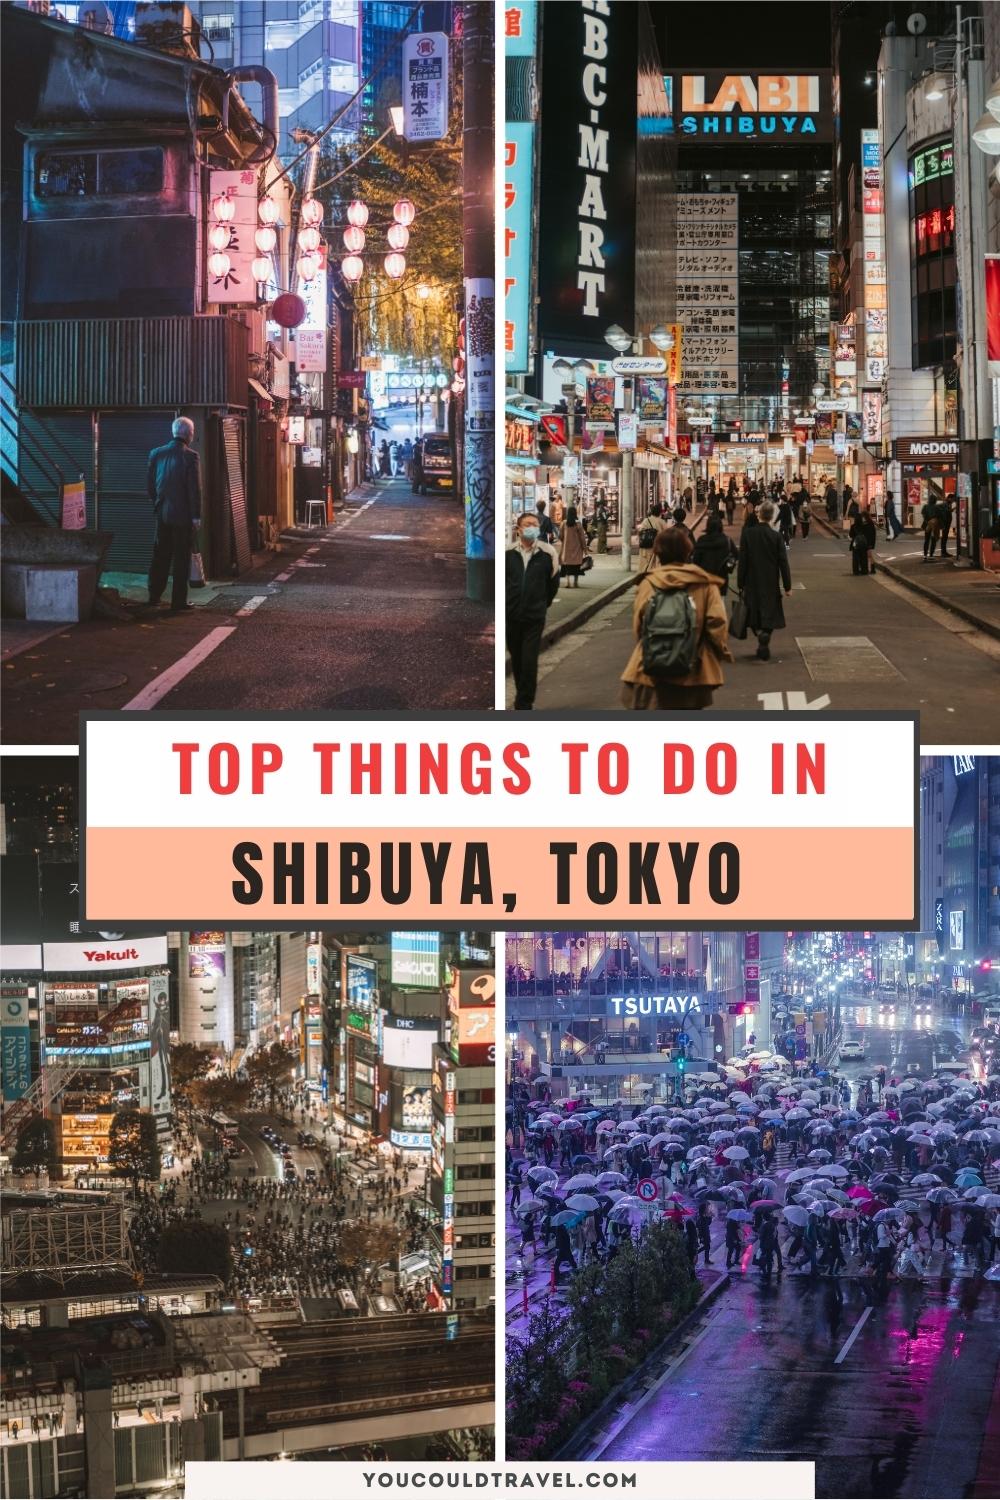 Top things to do in Shibuya Tokyo